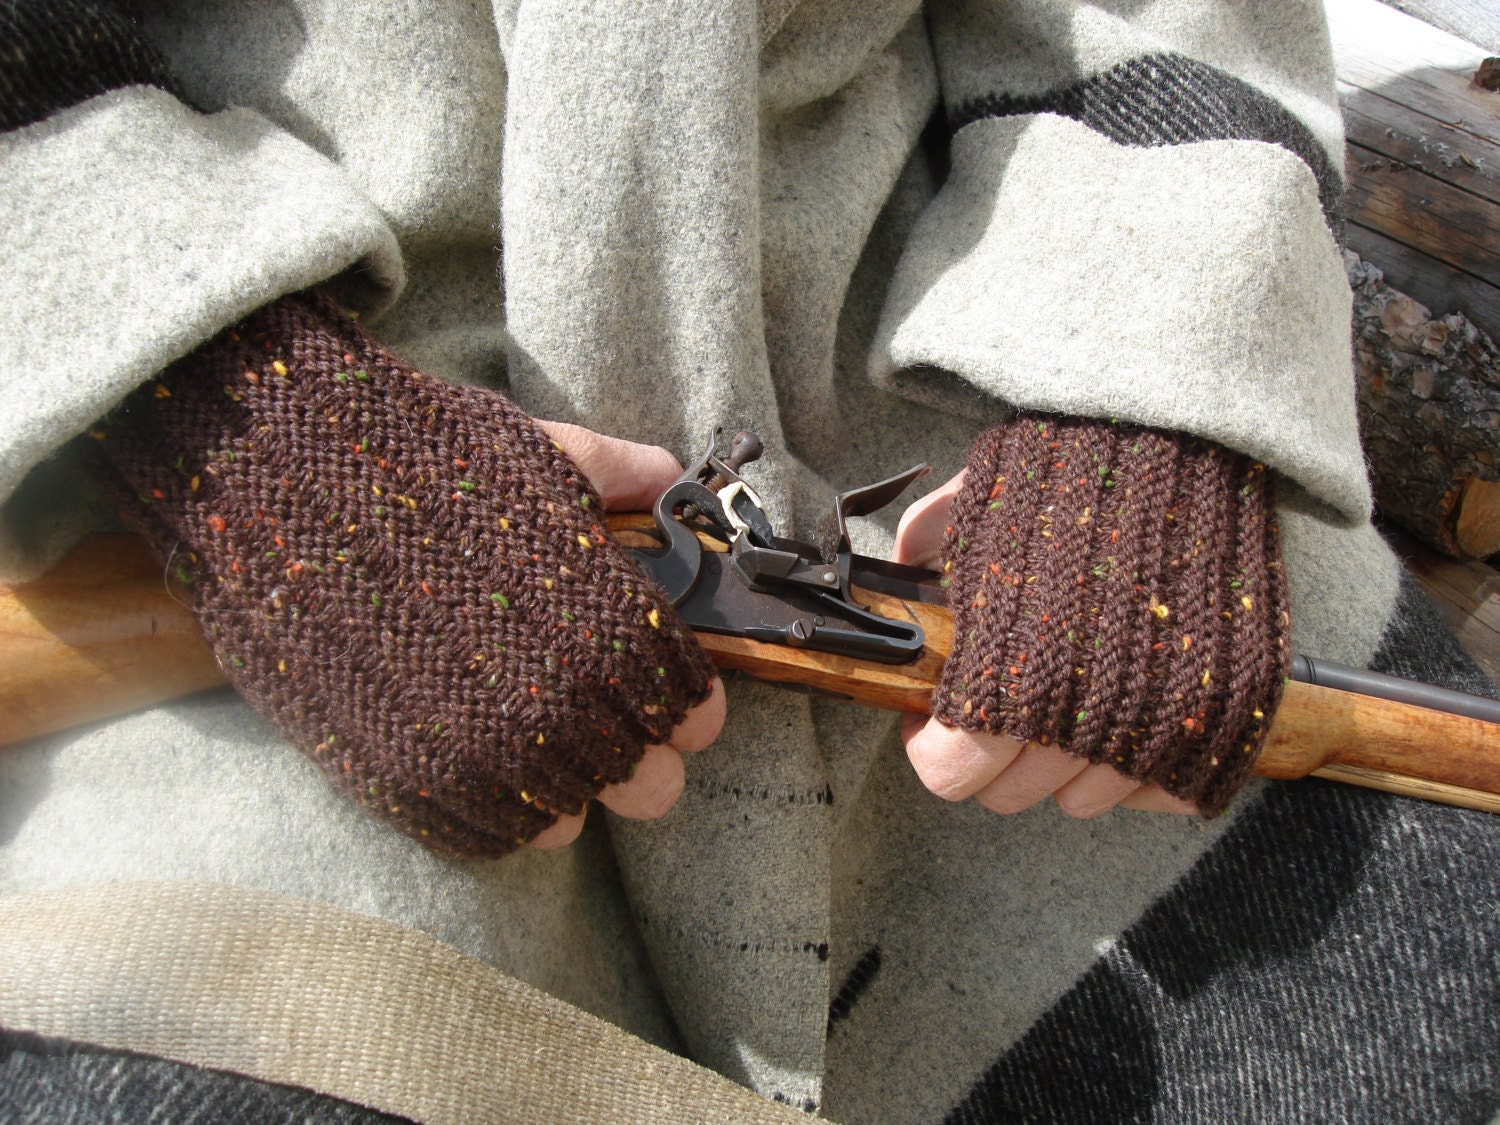 Muffatees - Finglerless mitts - from 1840 Workwoman's Guide - BeaverCreekTraders